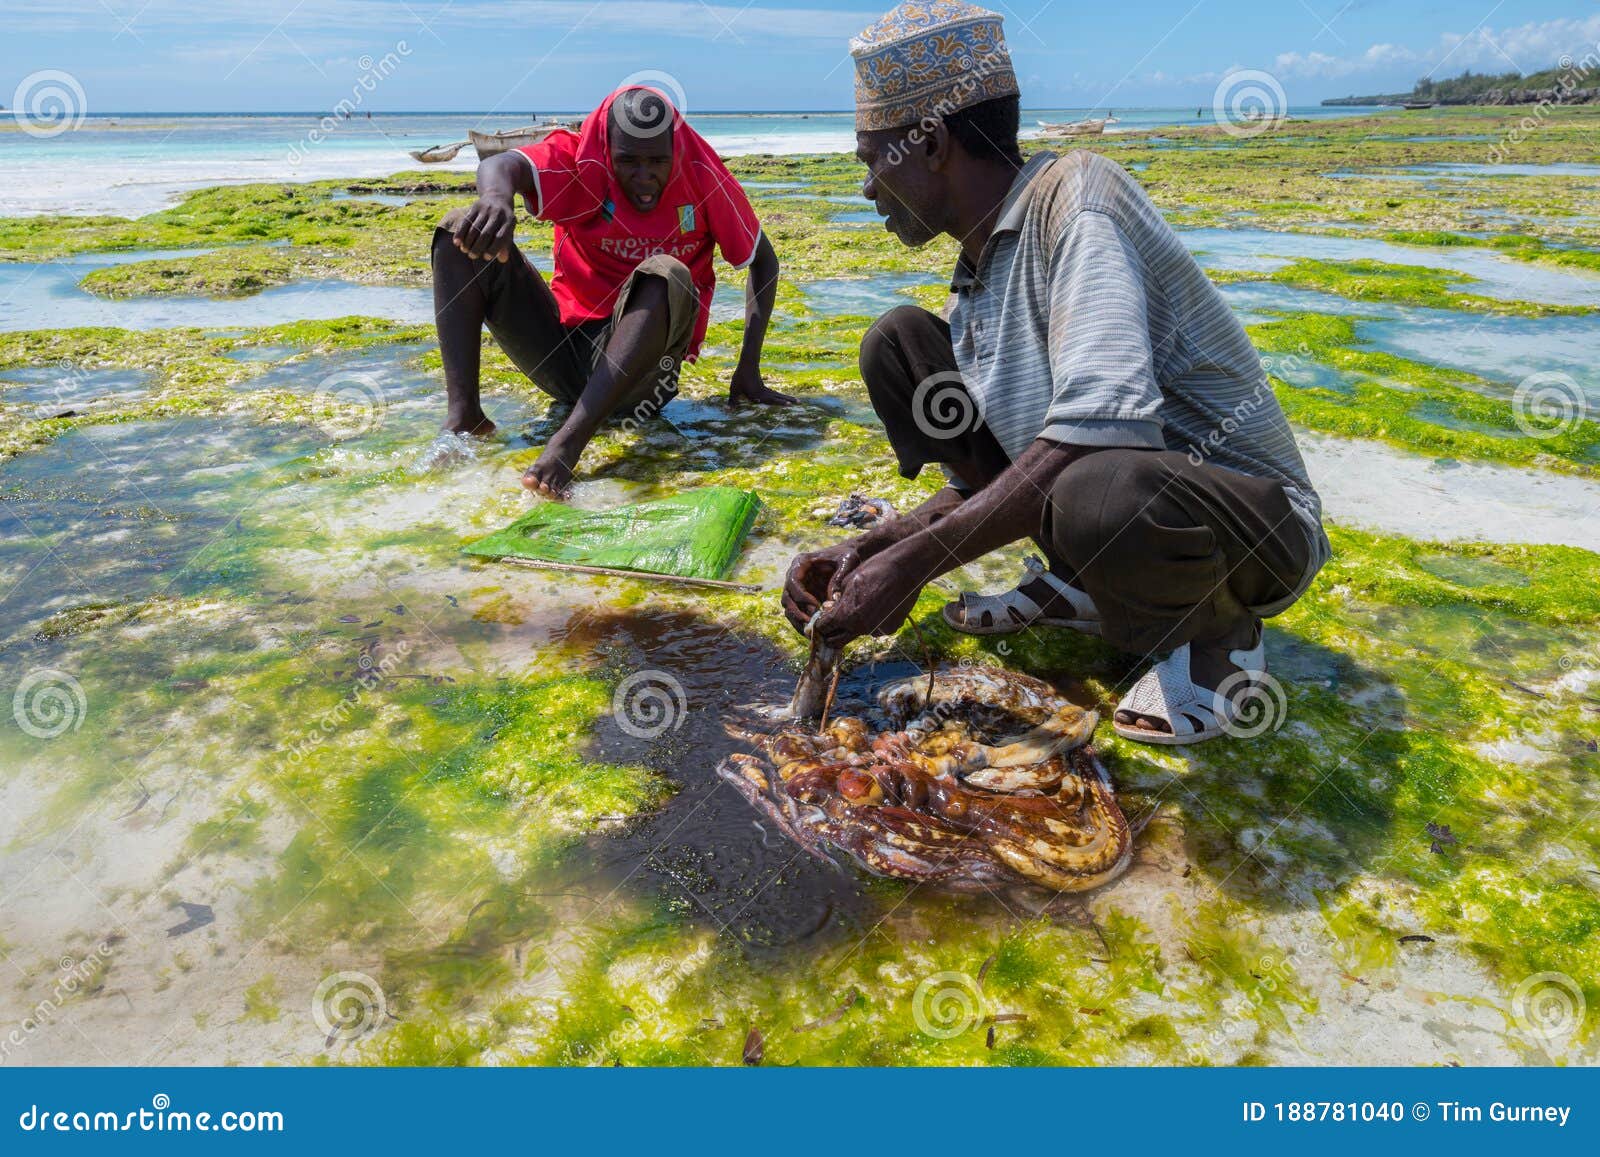 Octopus Fishing on the Eastern Coast of Zanzibar Editorial Image